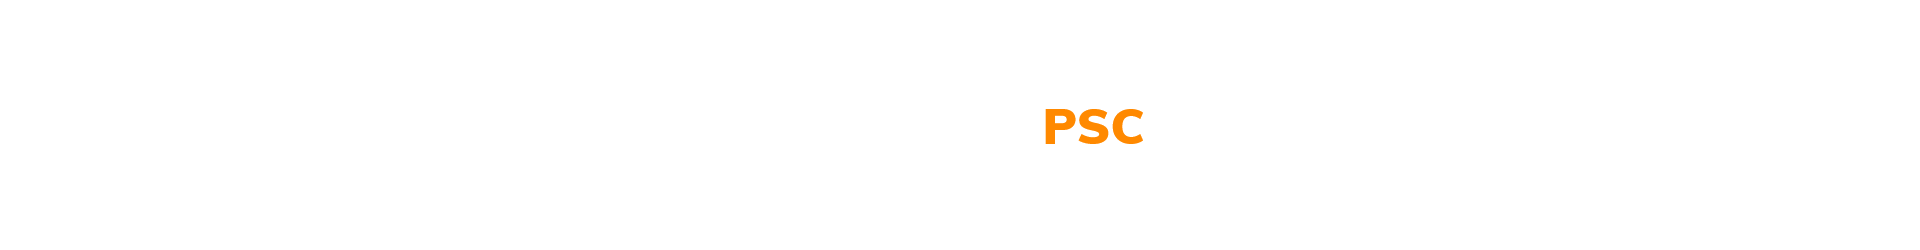 My-Digital-PSC